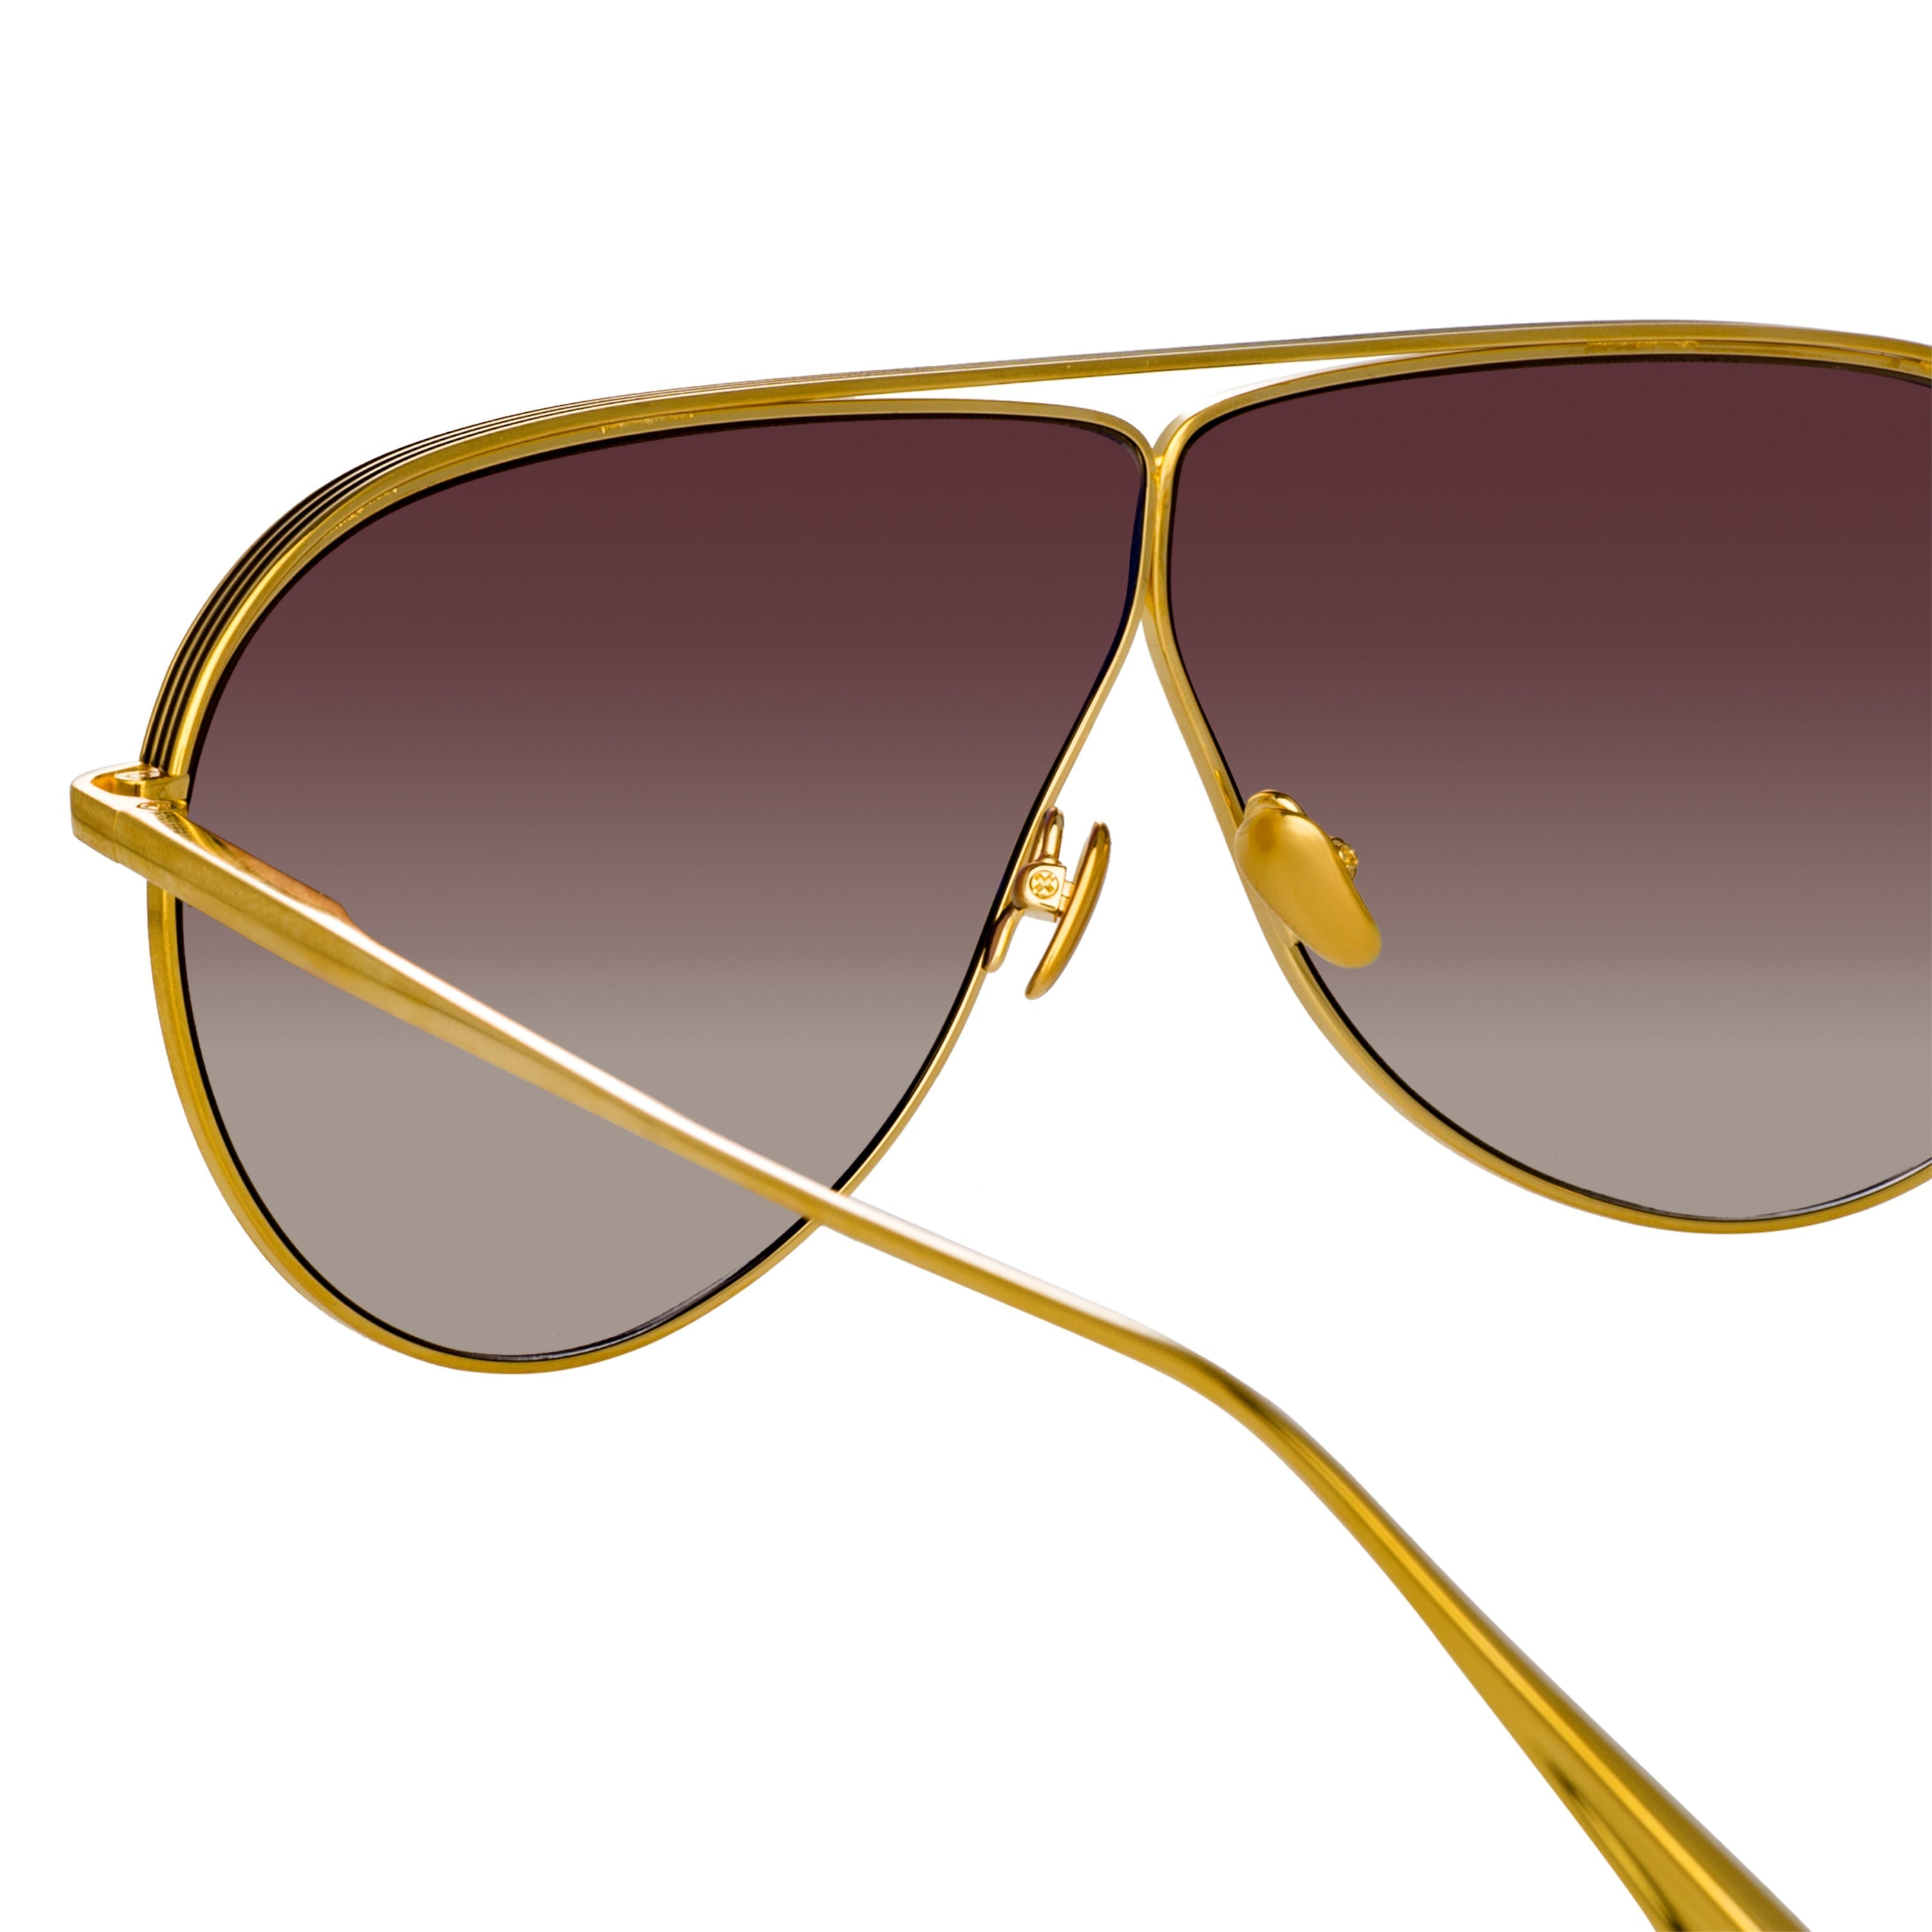 Color_LFL1263C2SUN - Hura Aviator Sunglasses in Yellow Gold